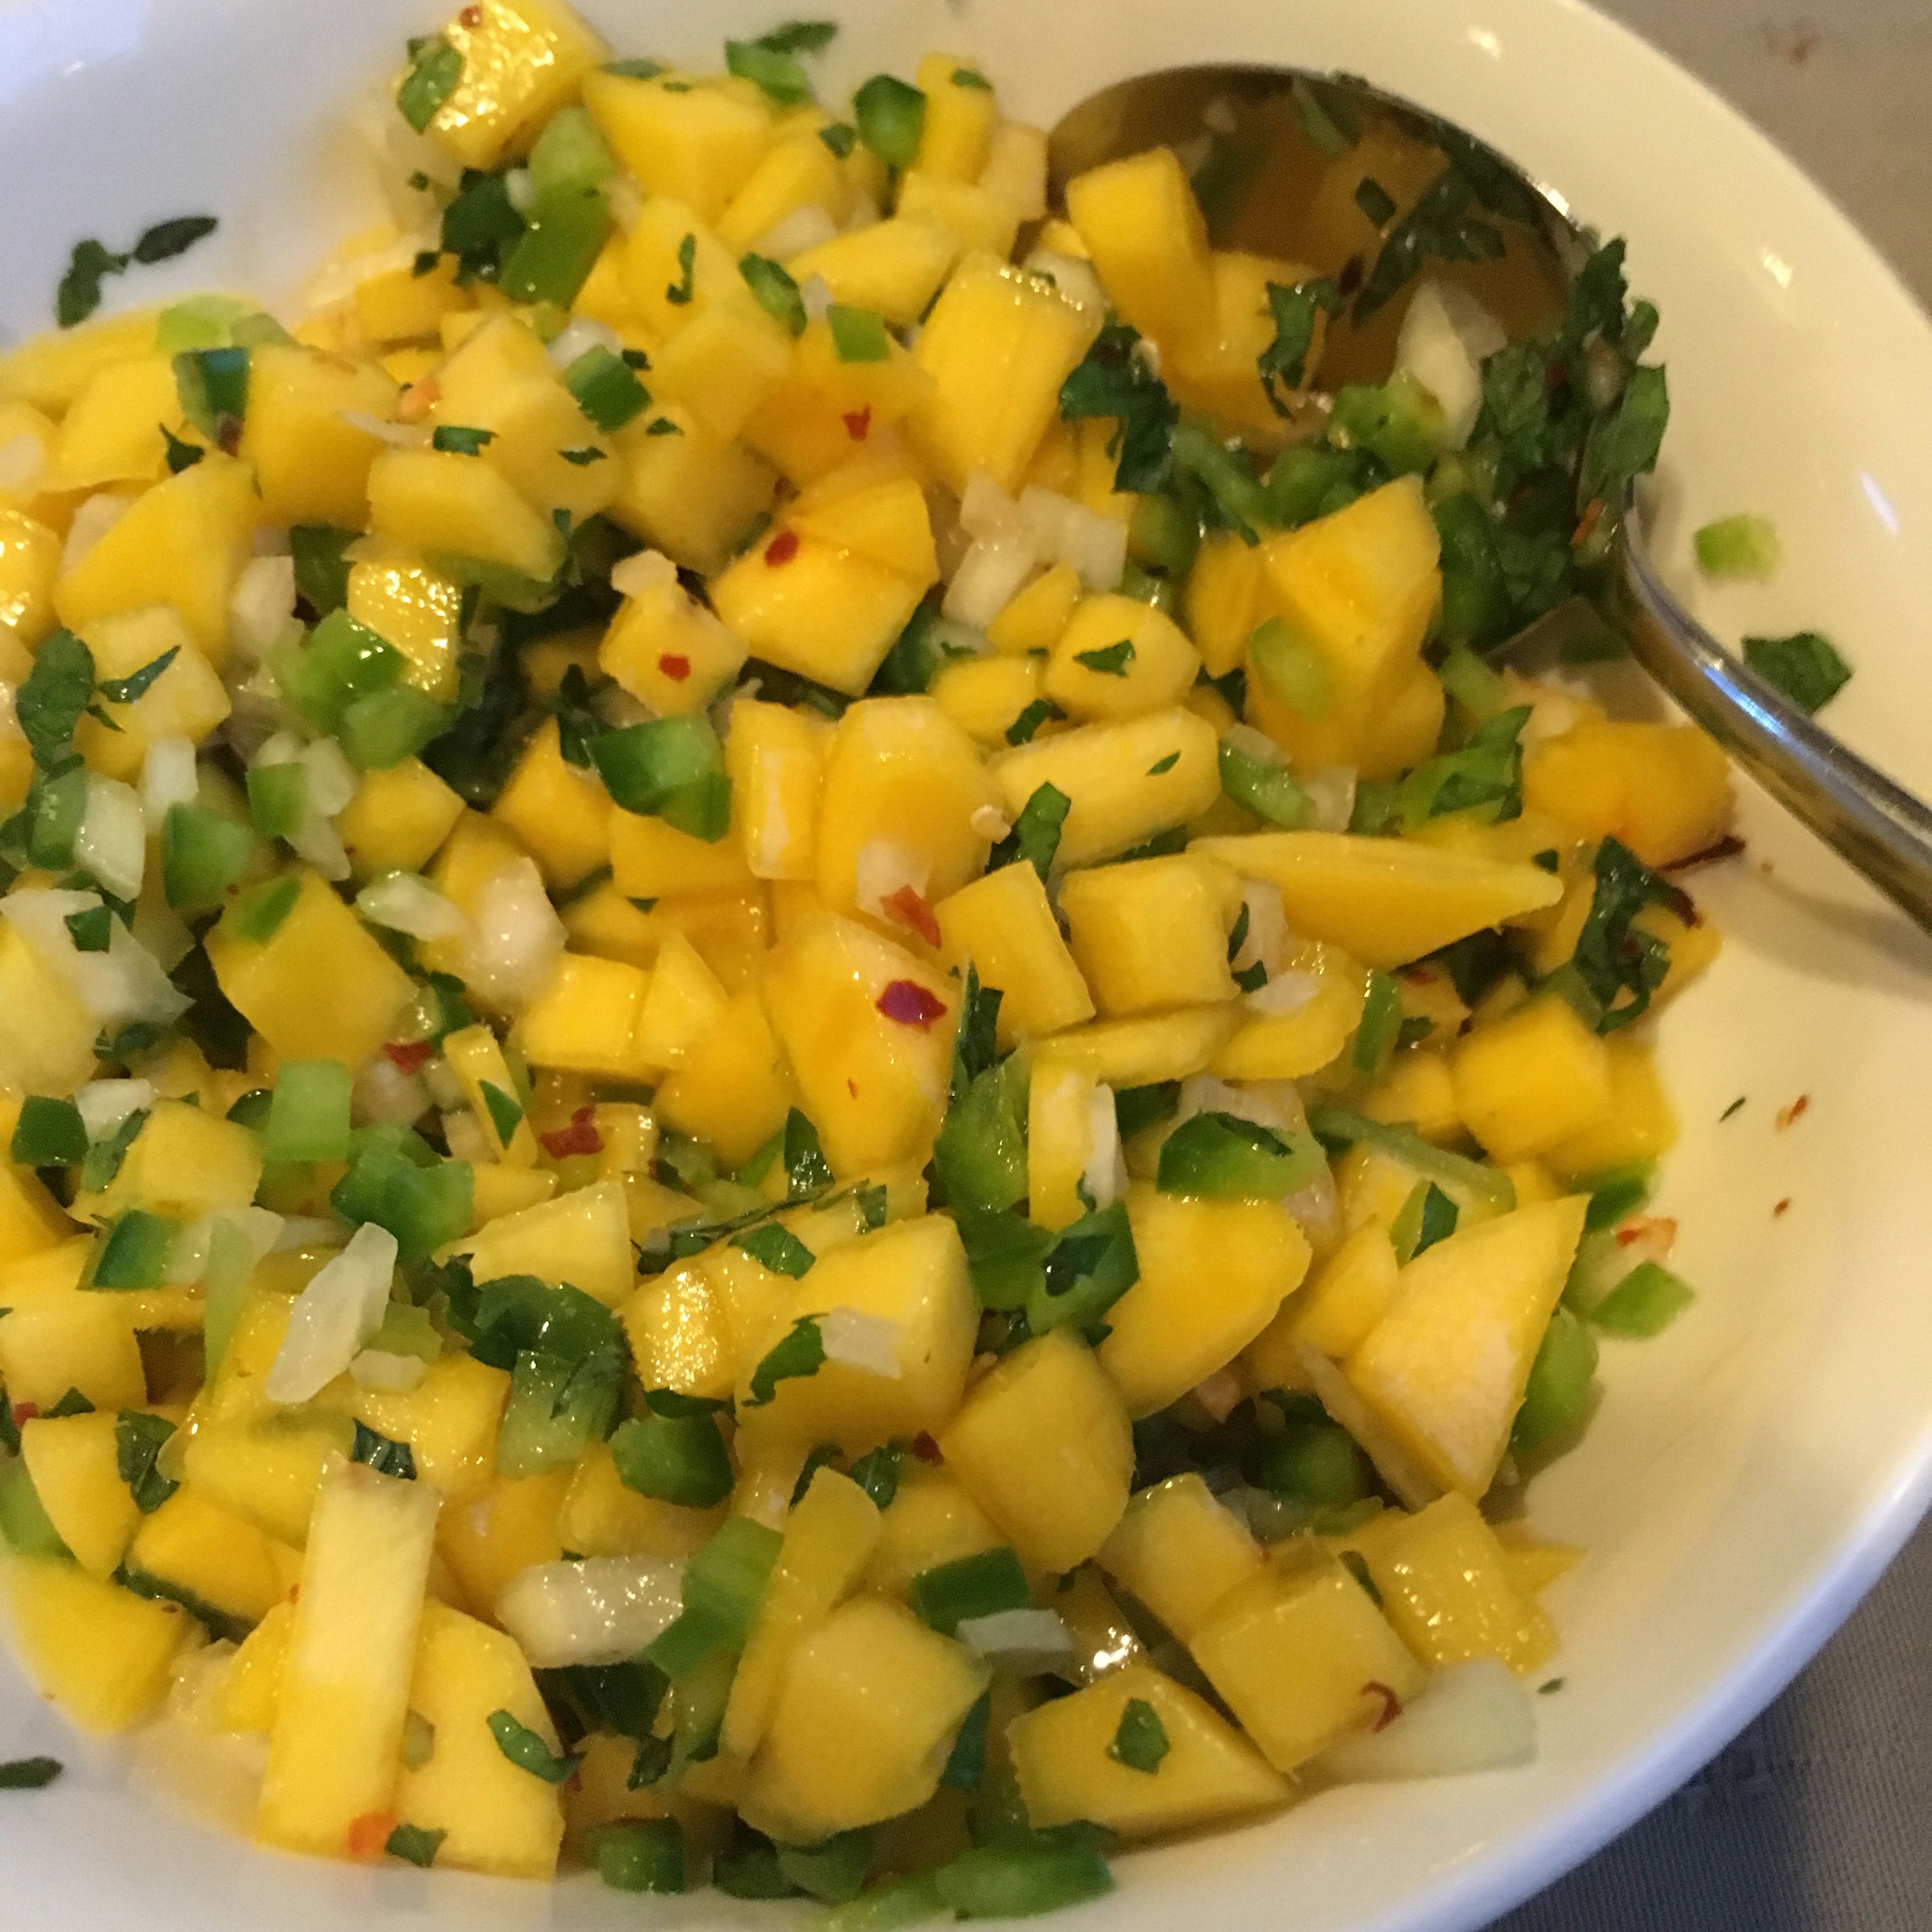 Spicy Mango Salad with Jalapeno